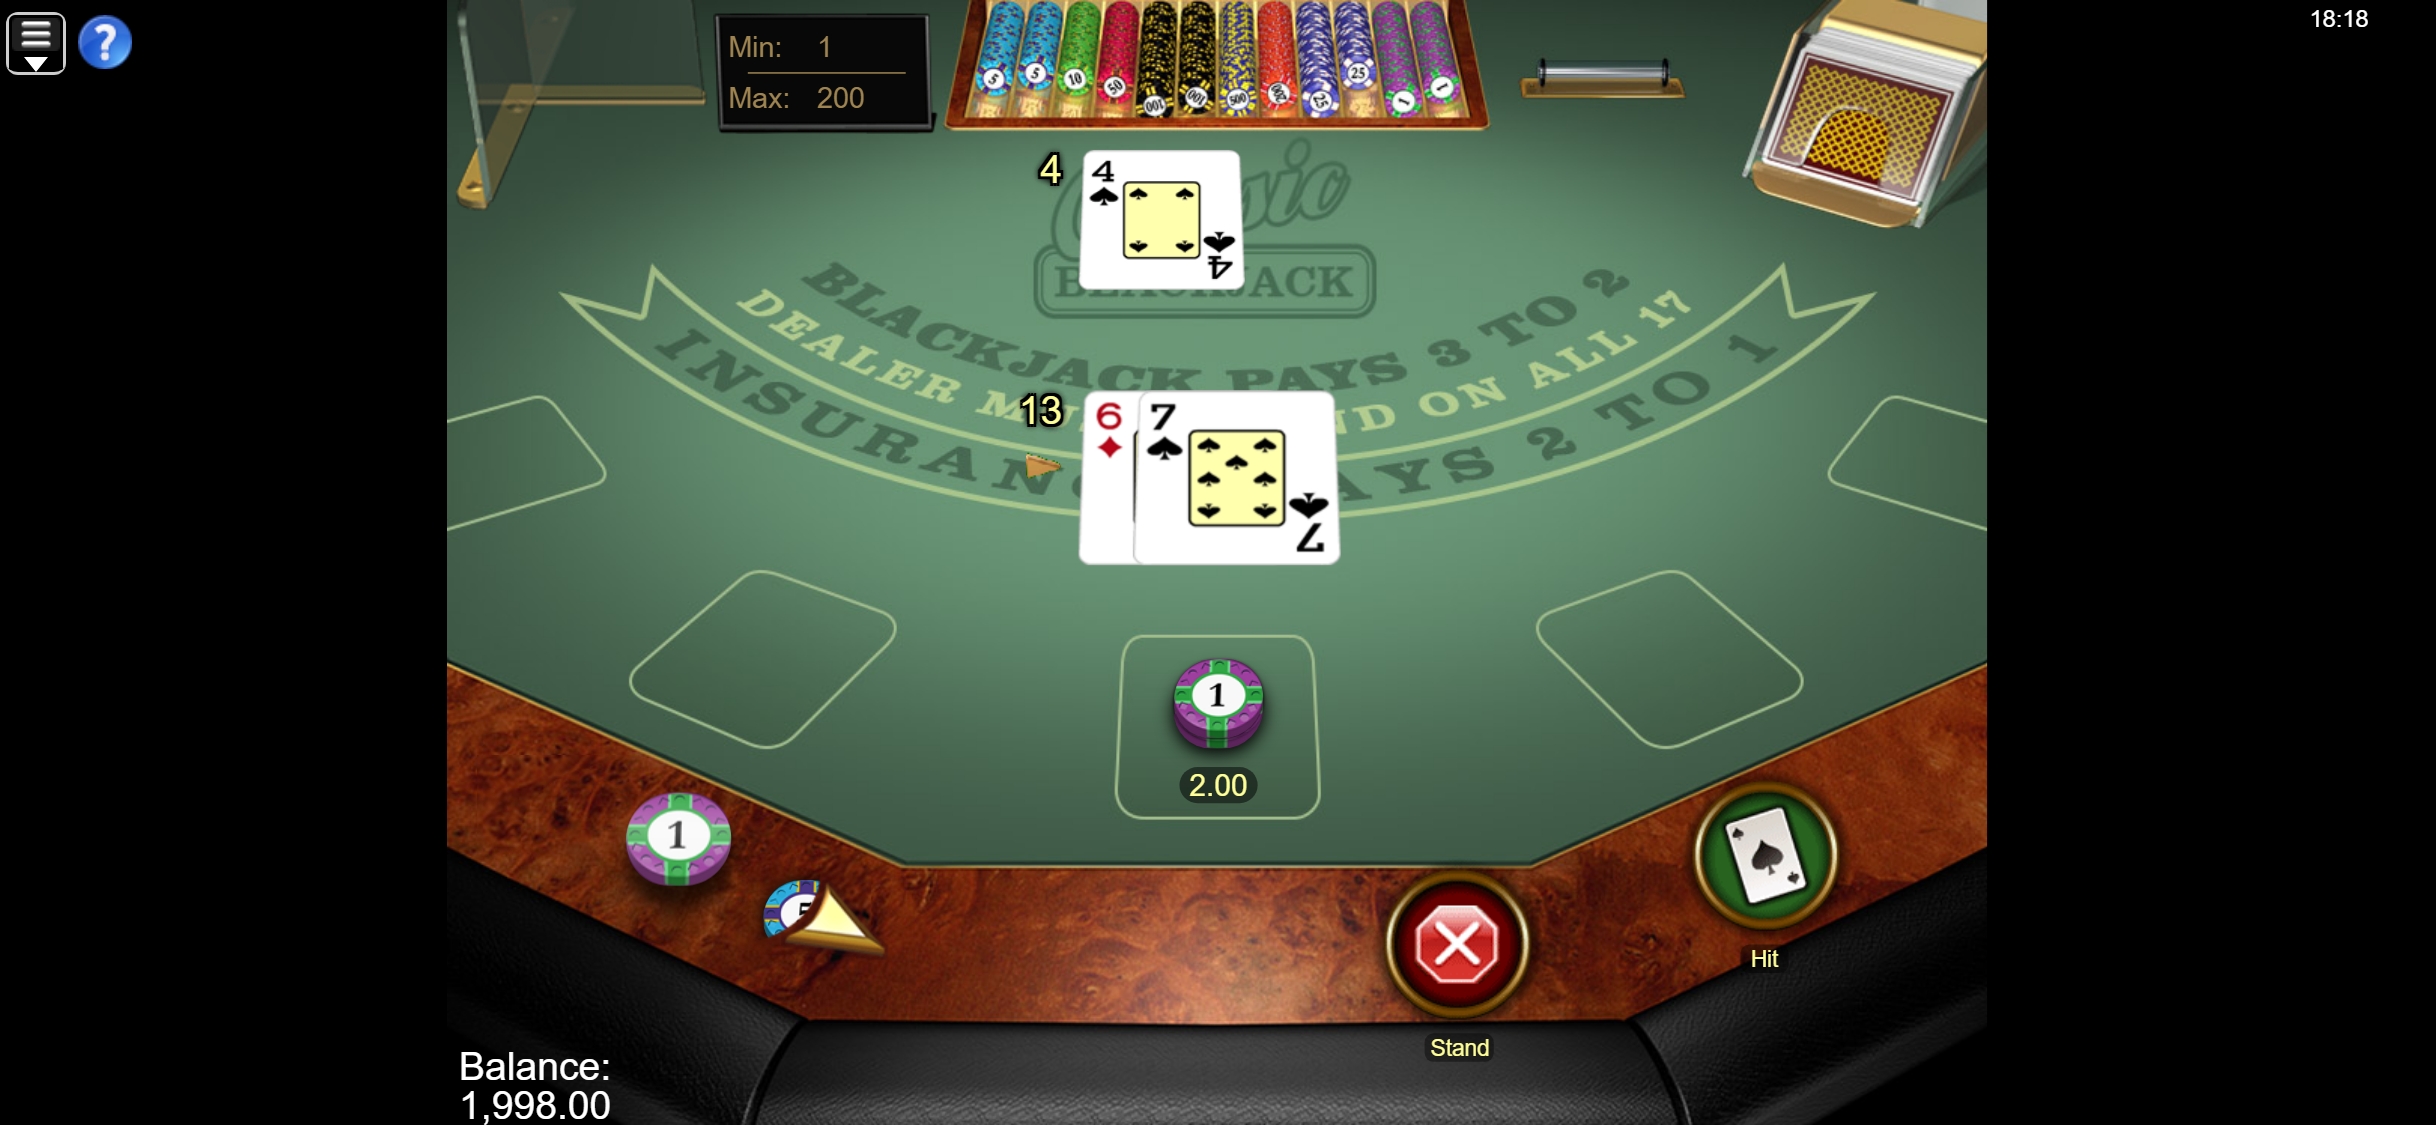 WildSlots Casino Mobile Slots Review